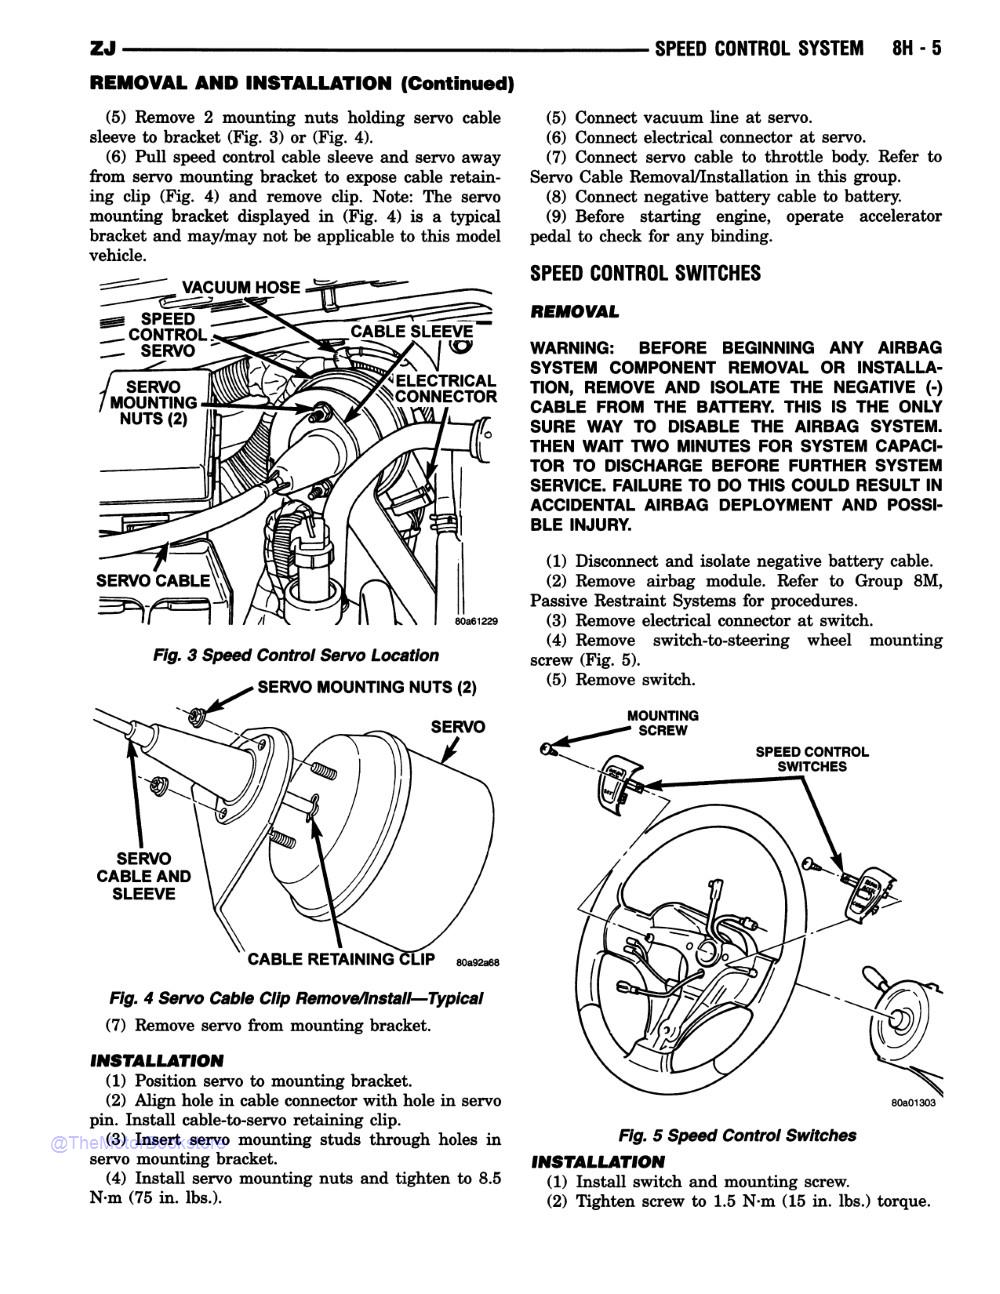 1998 Jeep Grand Cherokee Shop Manual - Sample Page 1